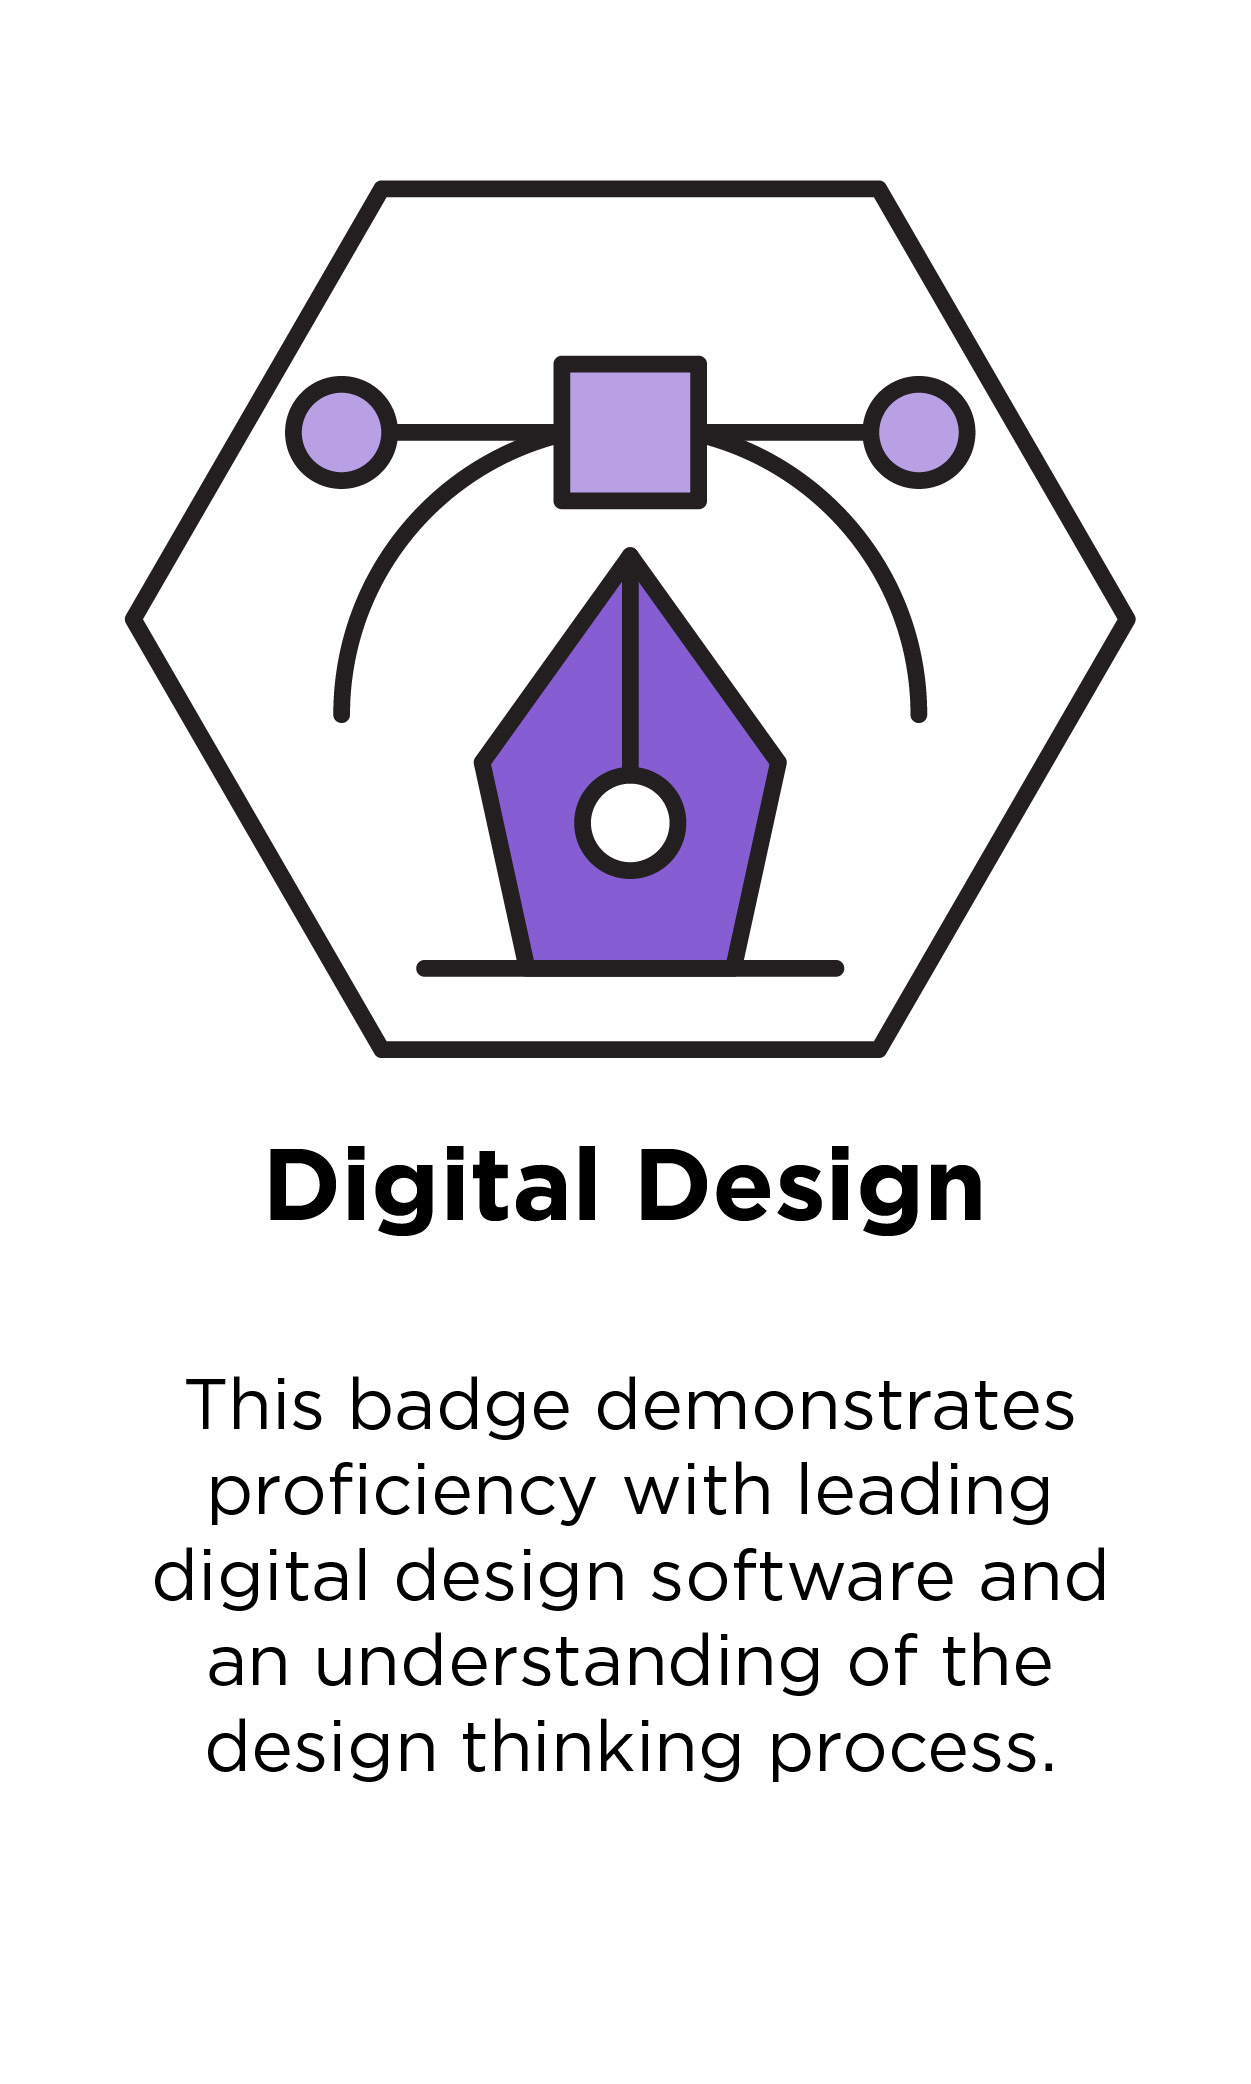 Digital Design Badge